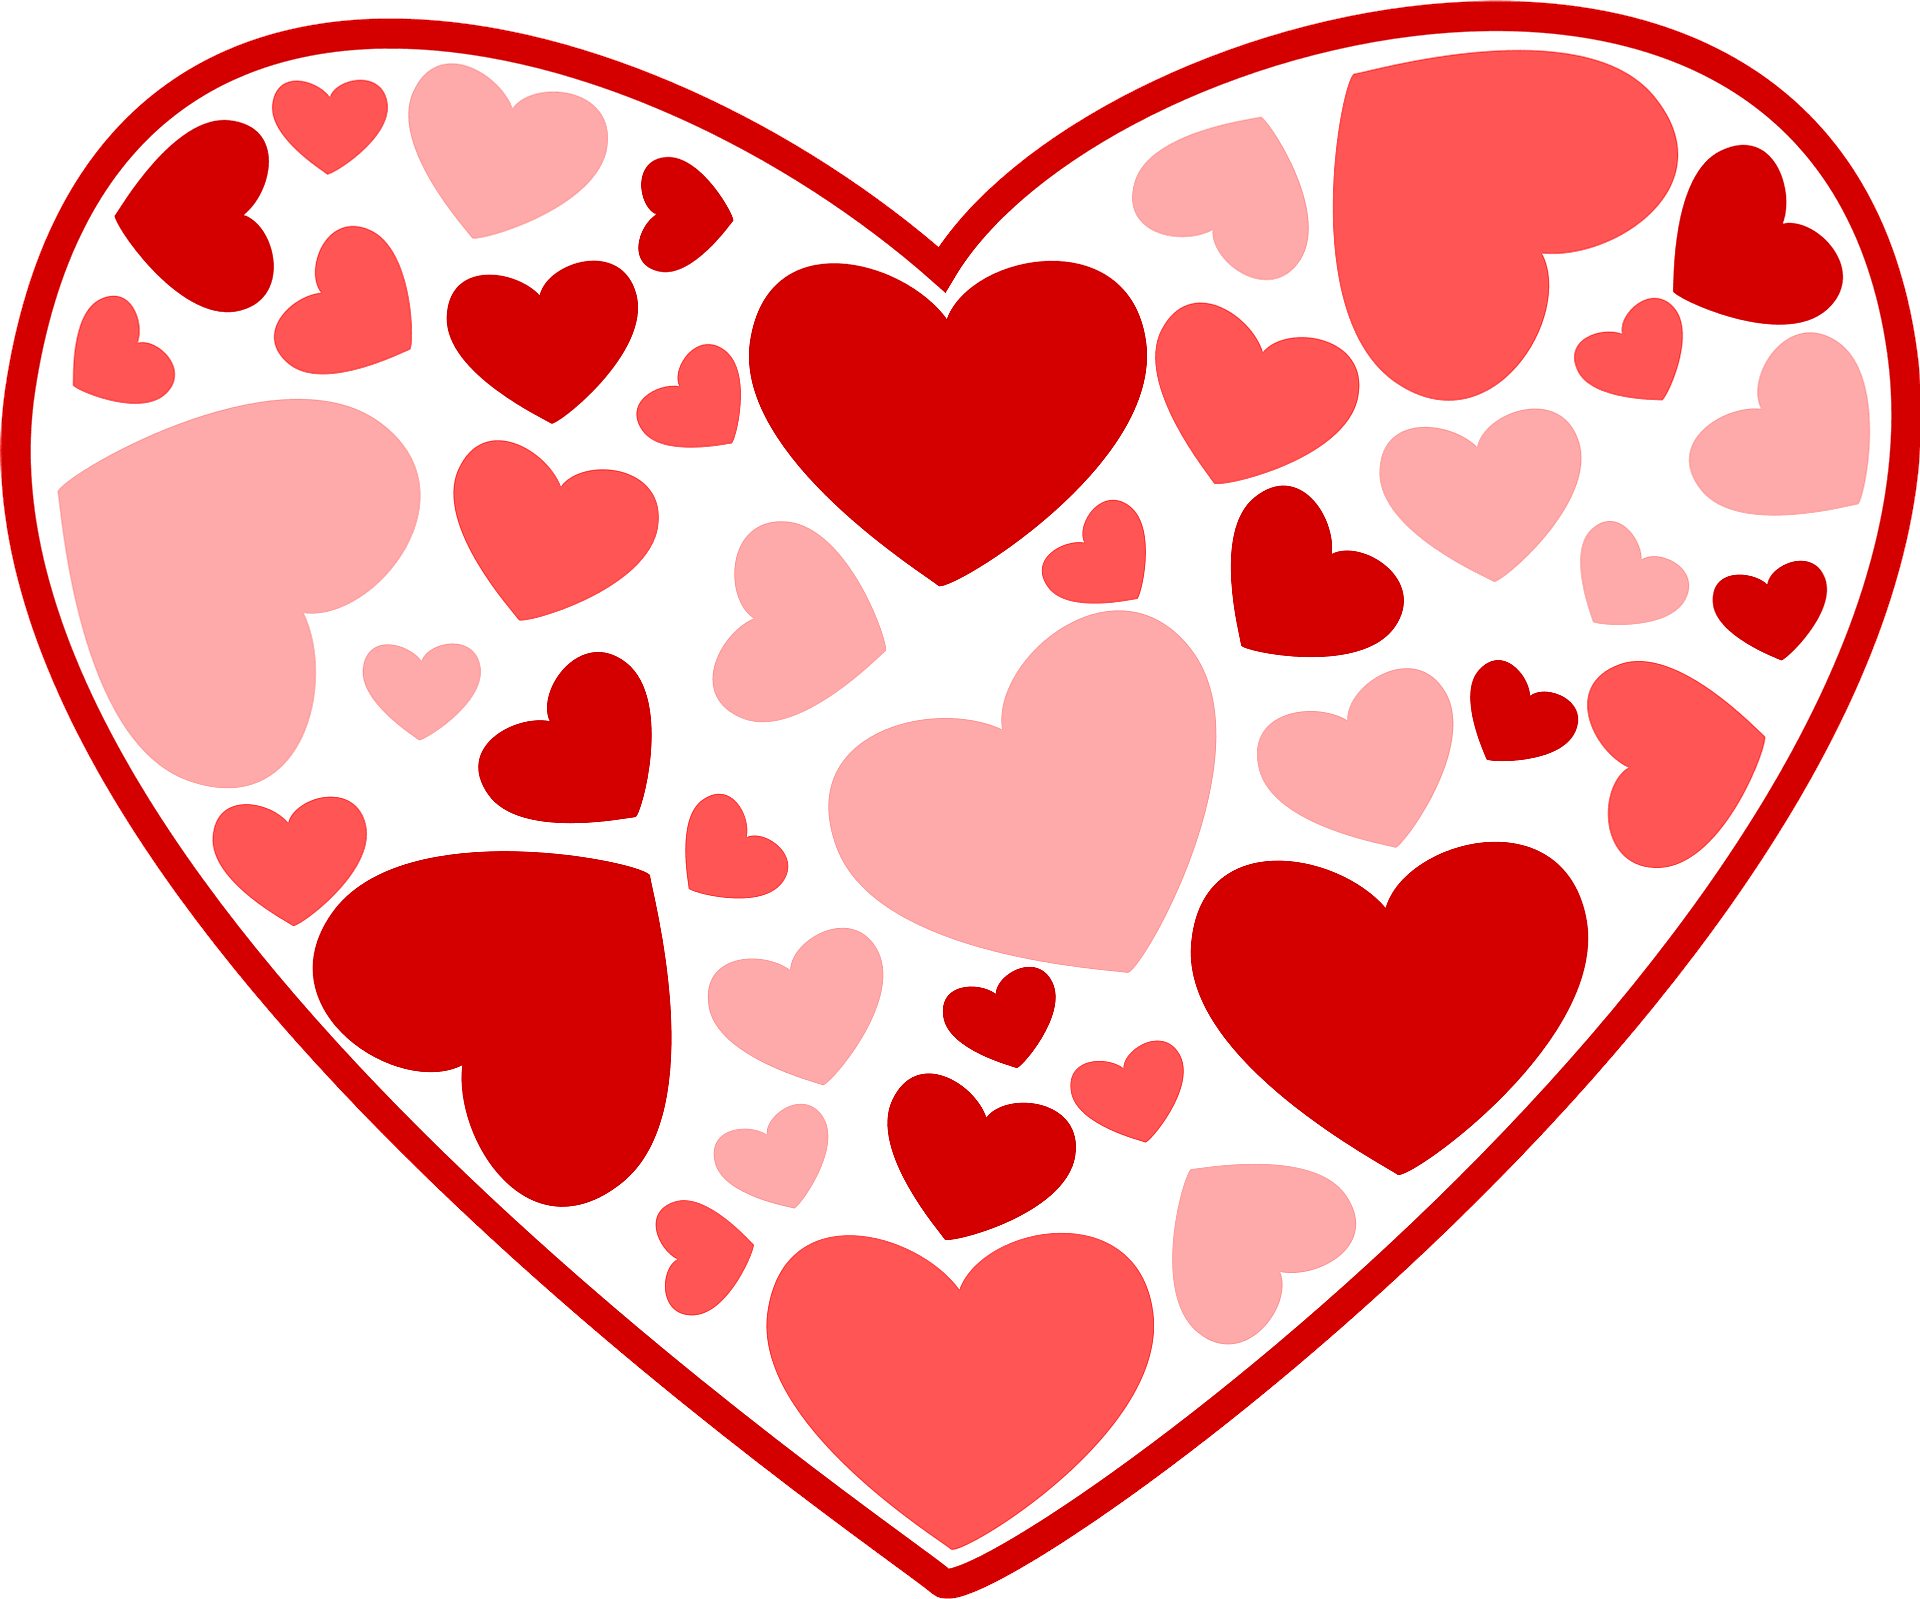 Heart Clip Art - Heart Images - Clip Art Library